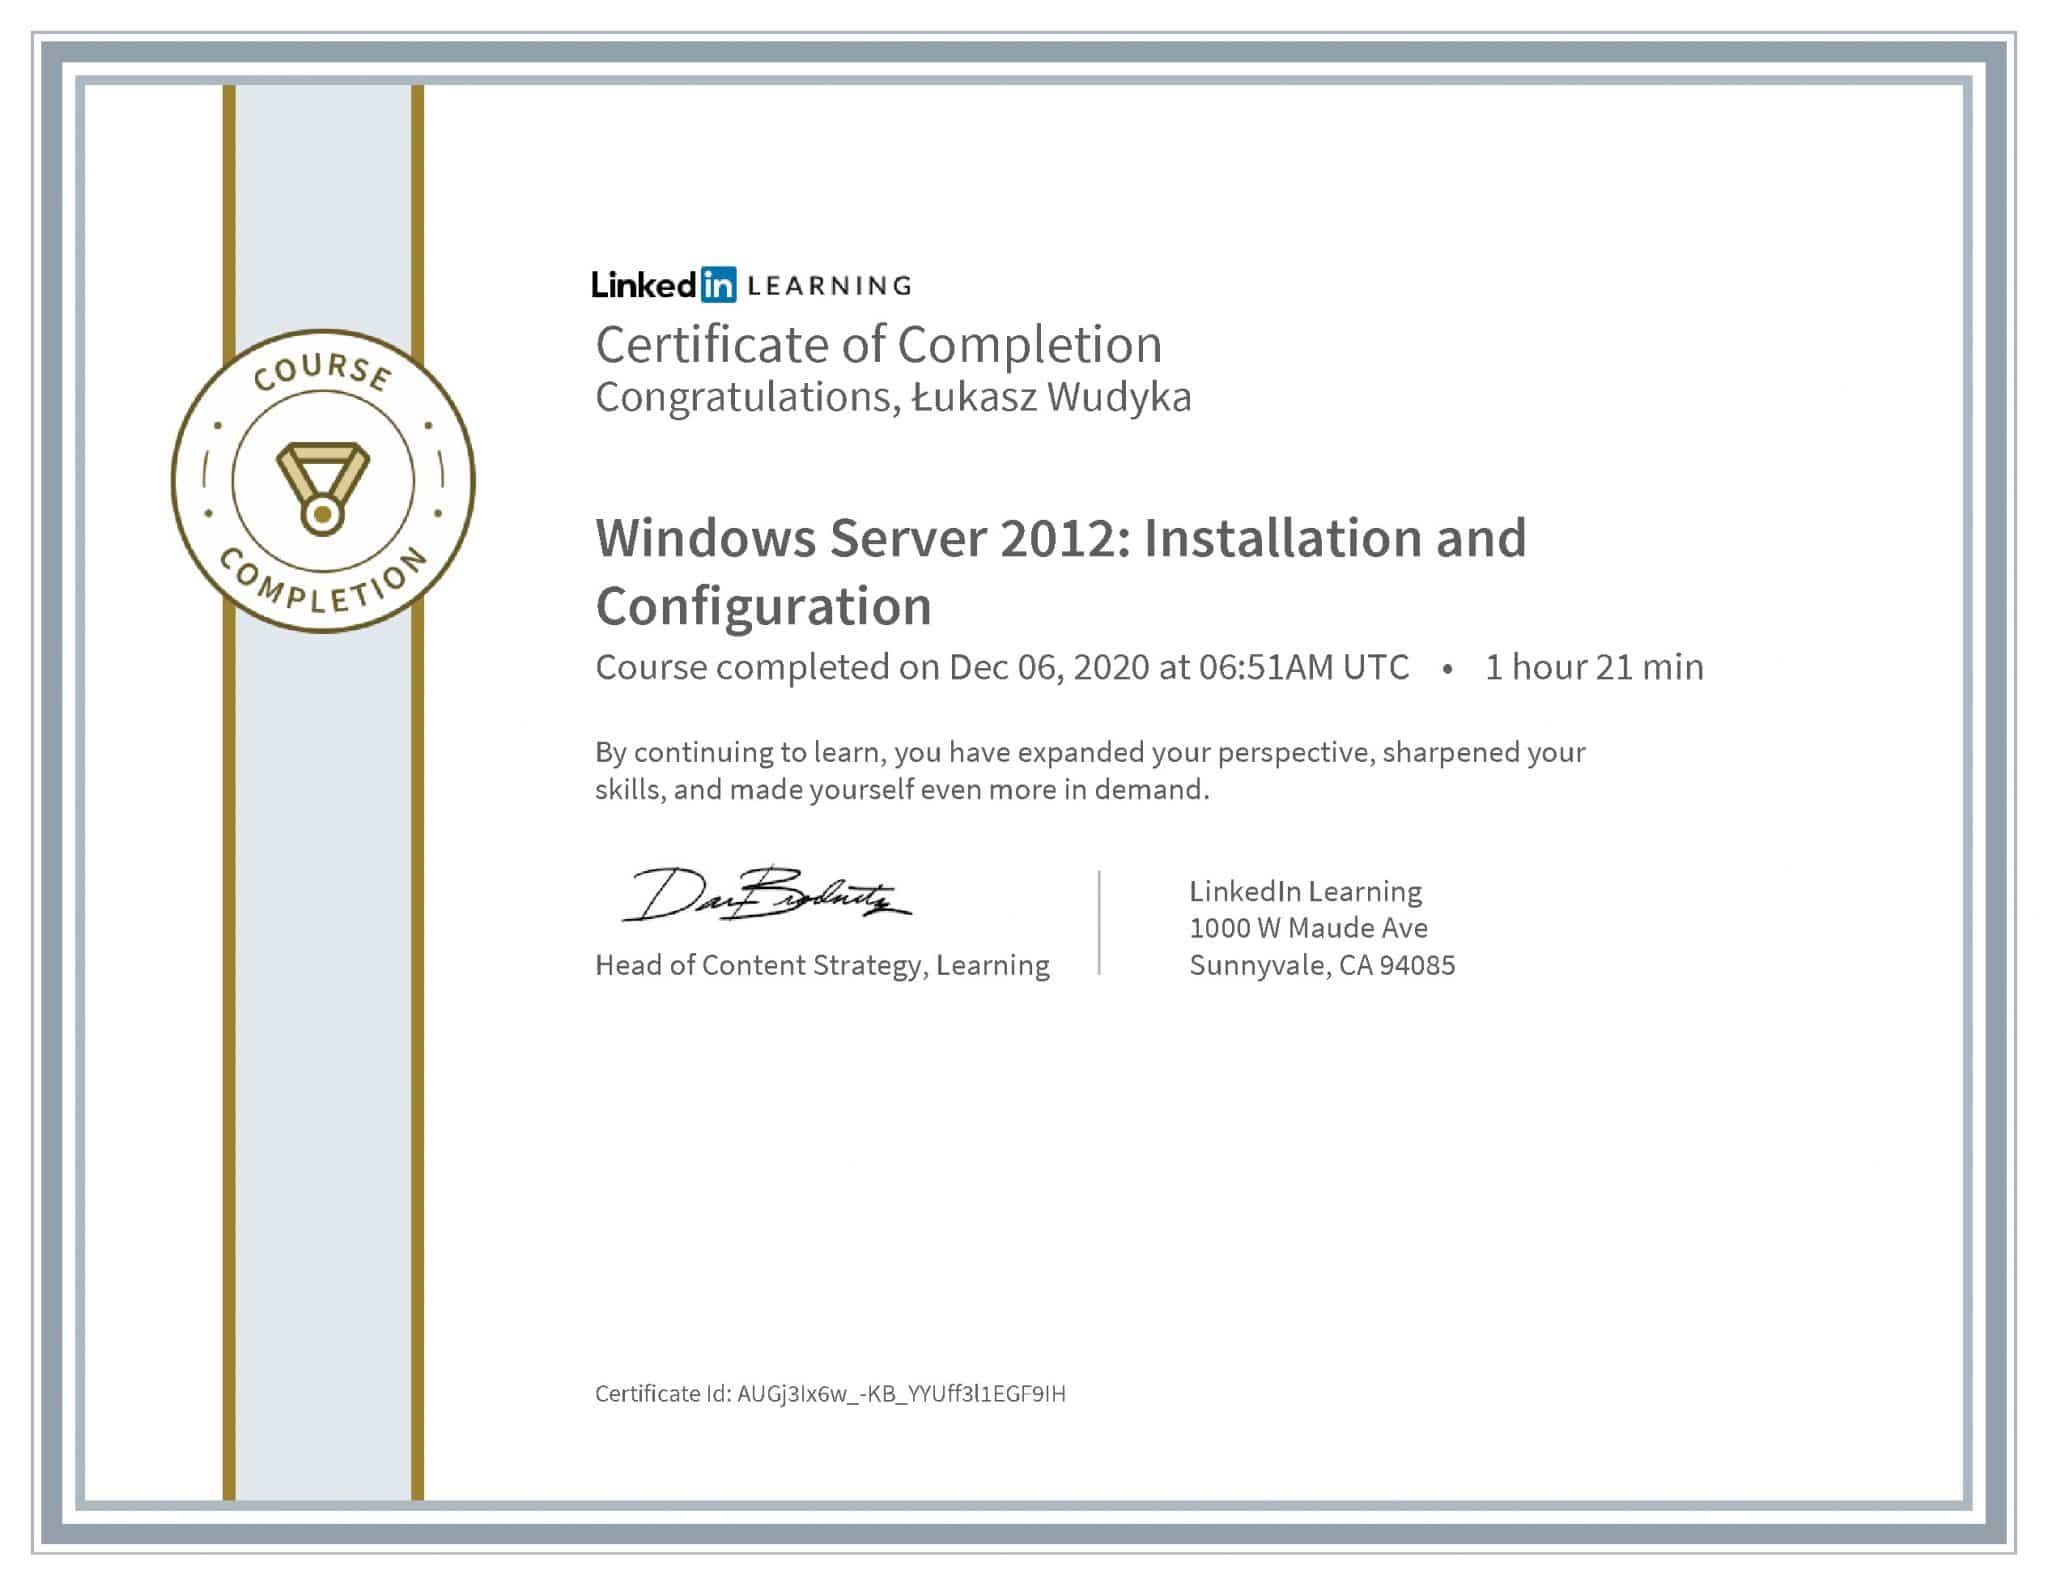 Łukasz Wudyka certyfikat LinkedIn Windows Server 2012: Installation and Configuration